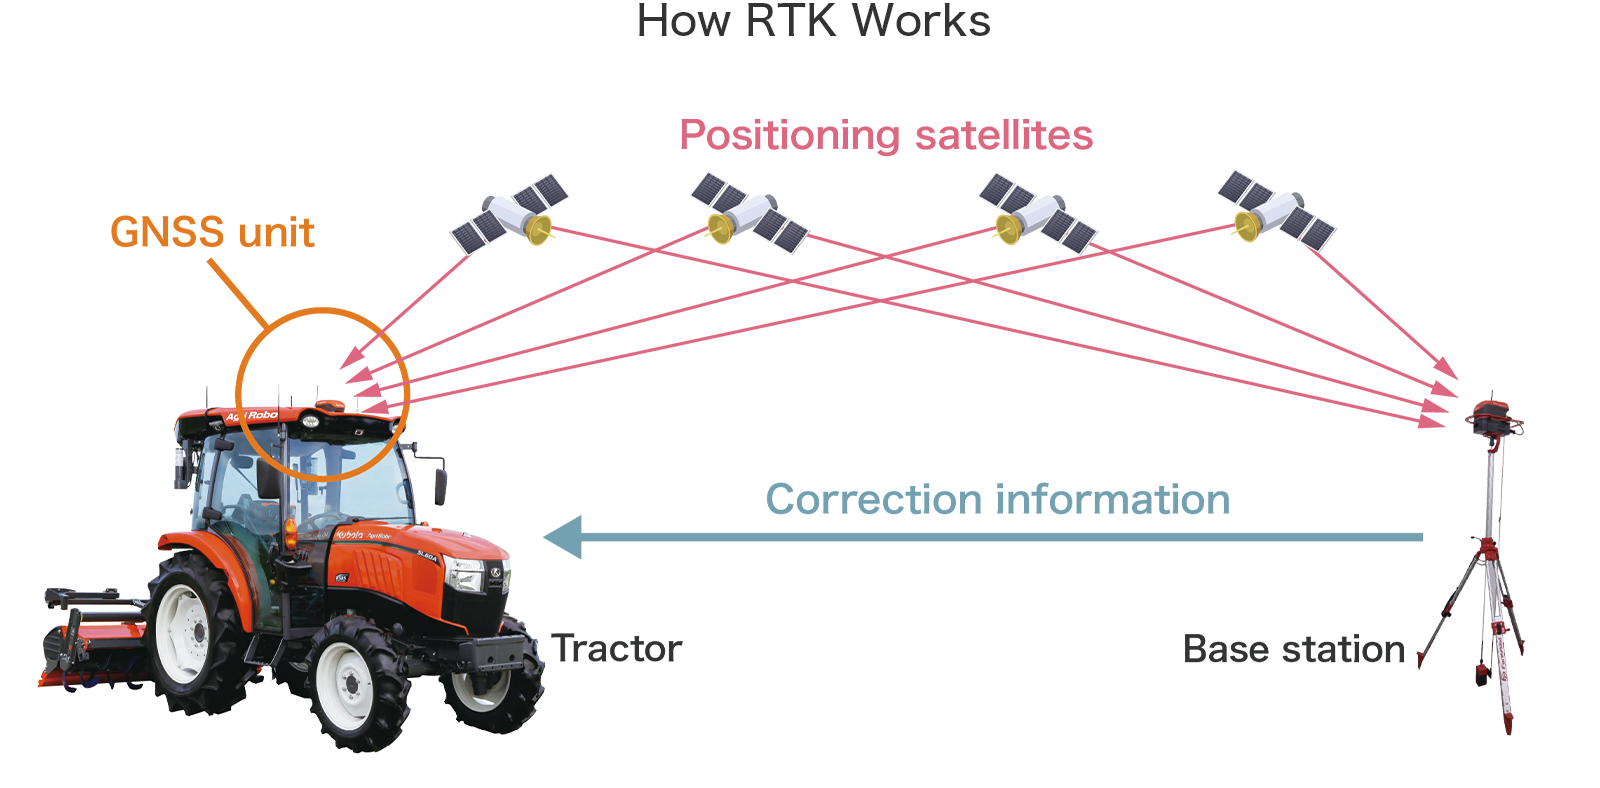 How RTK Works